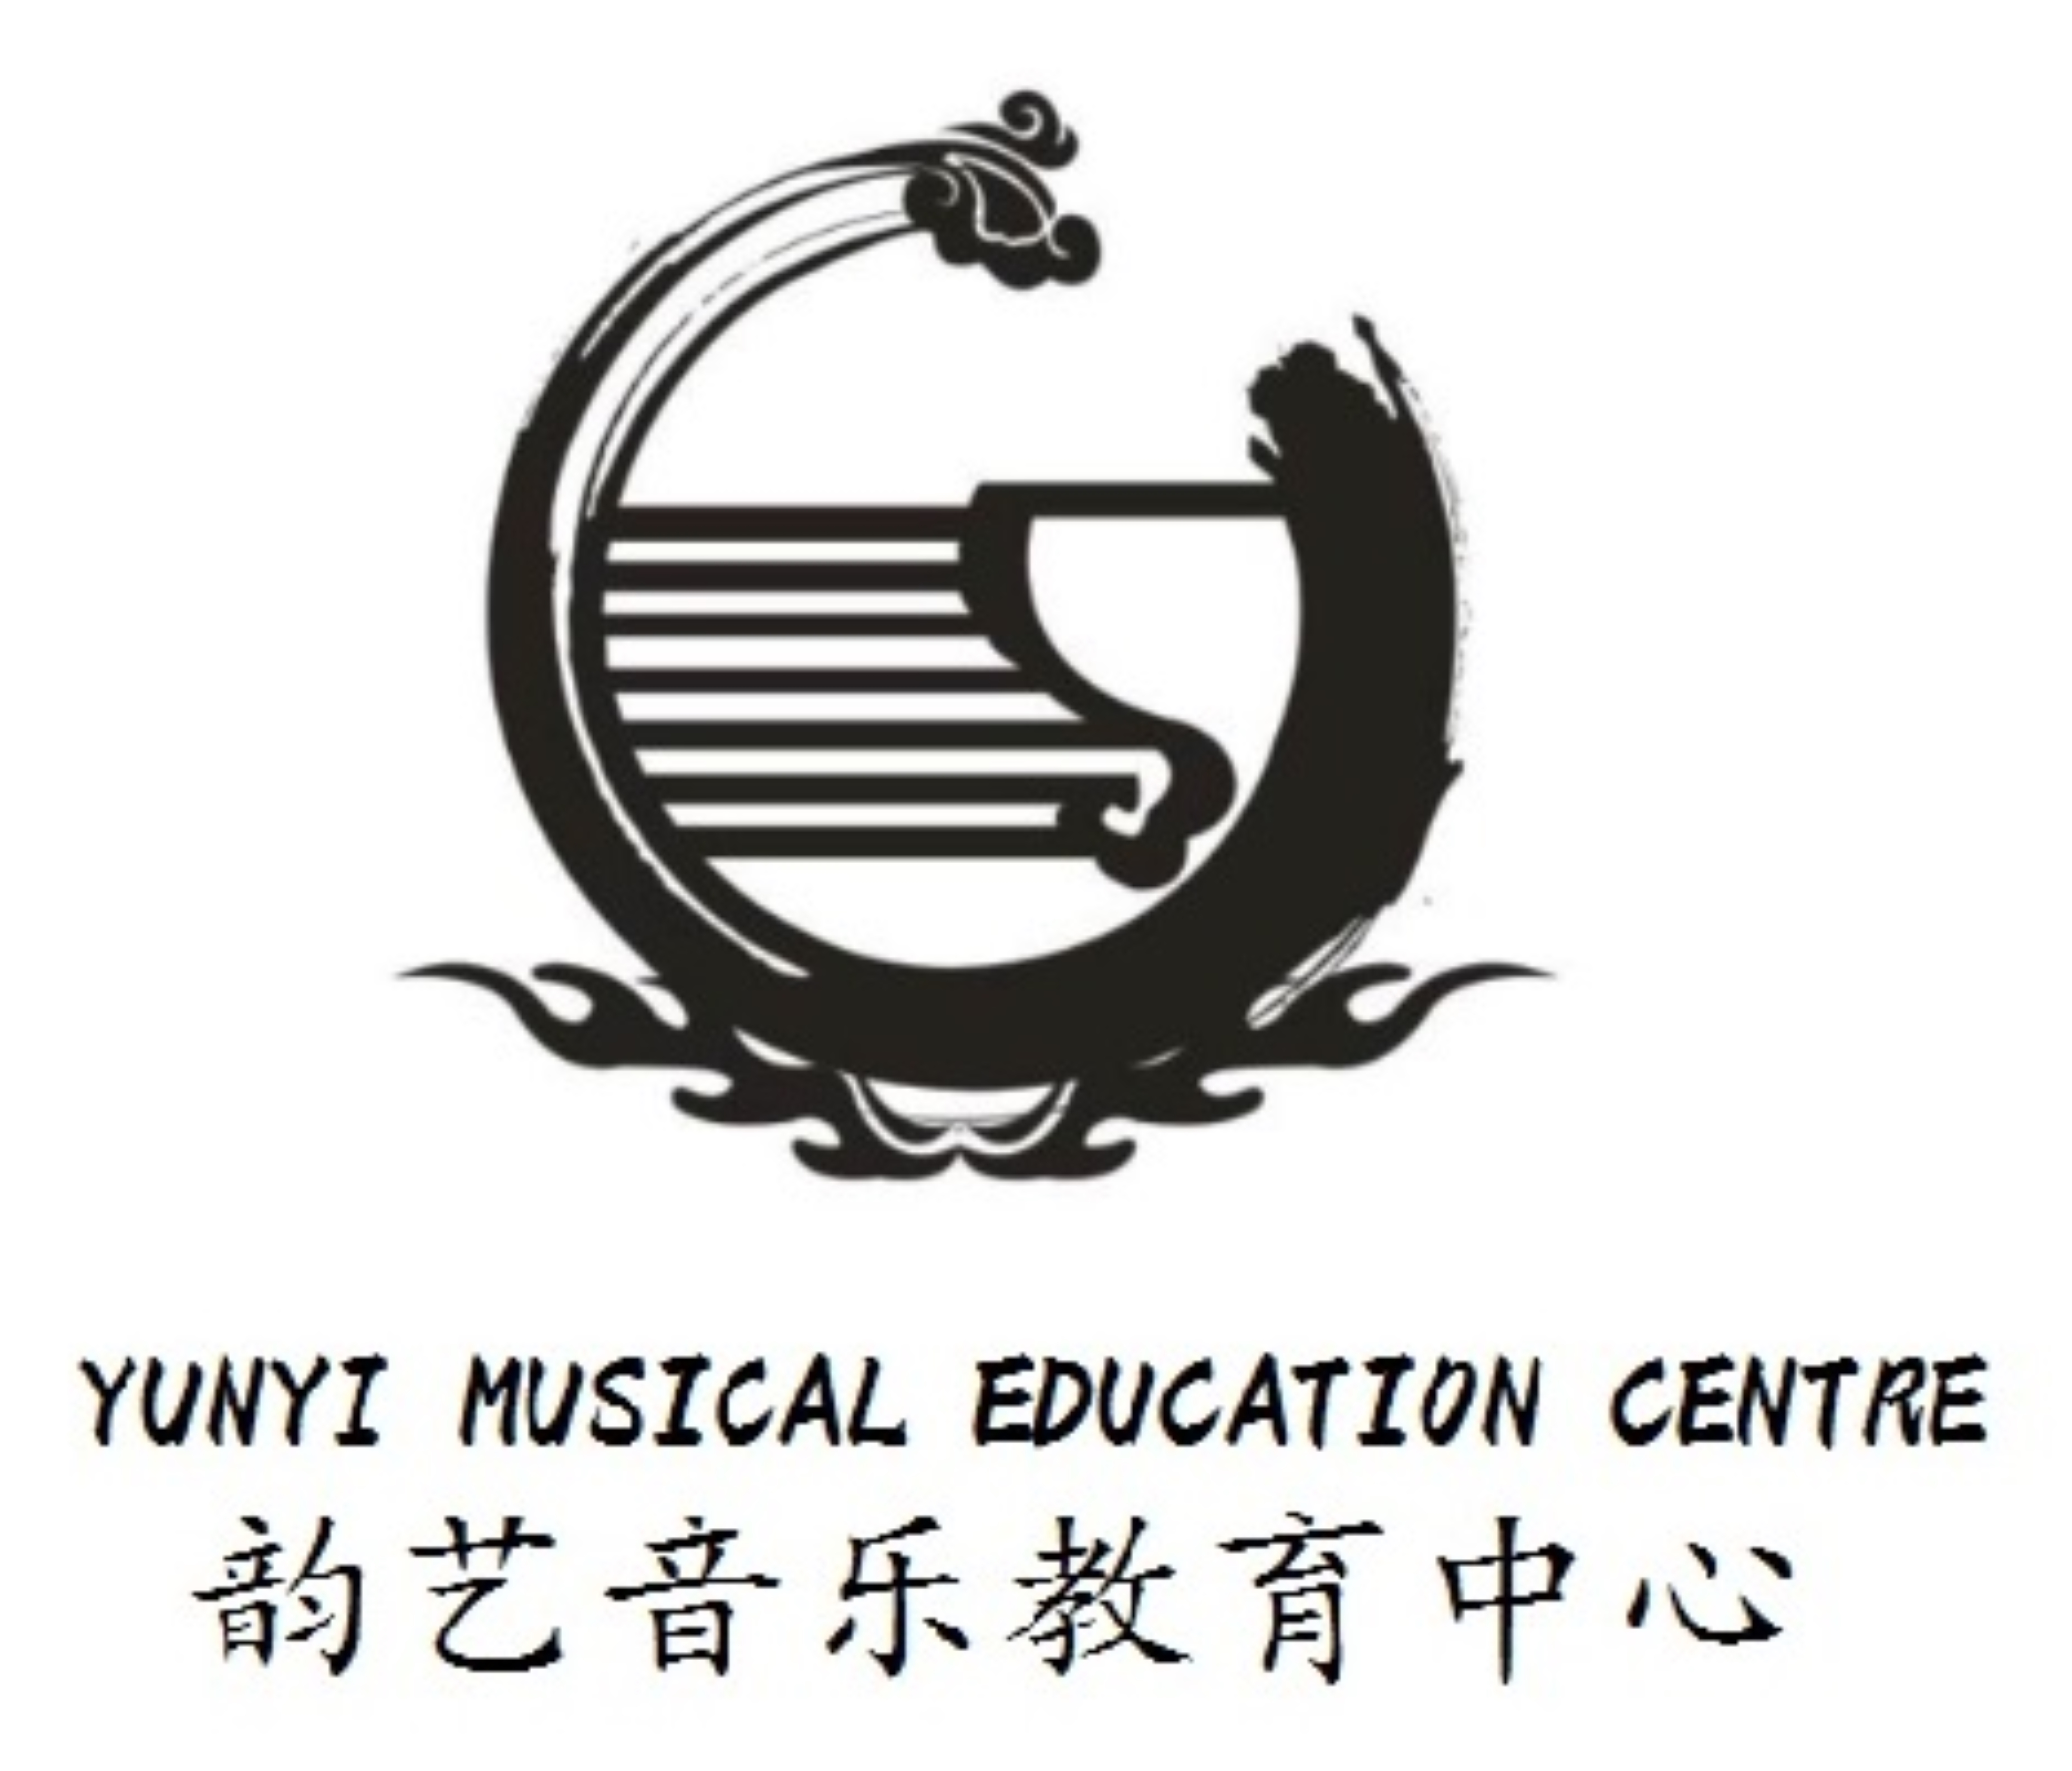 Yunyi Musical Education Centre